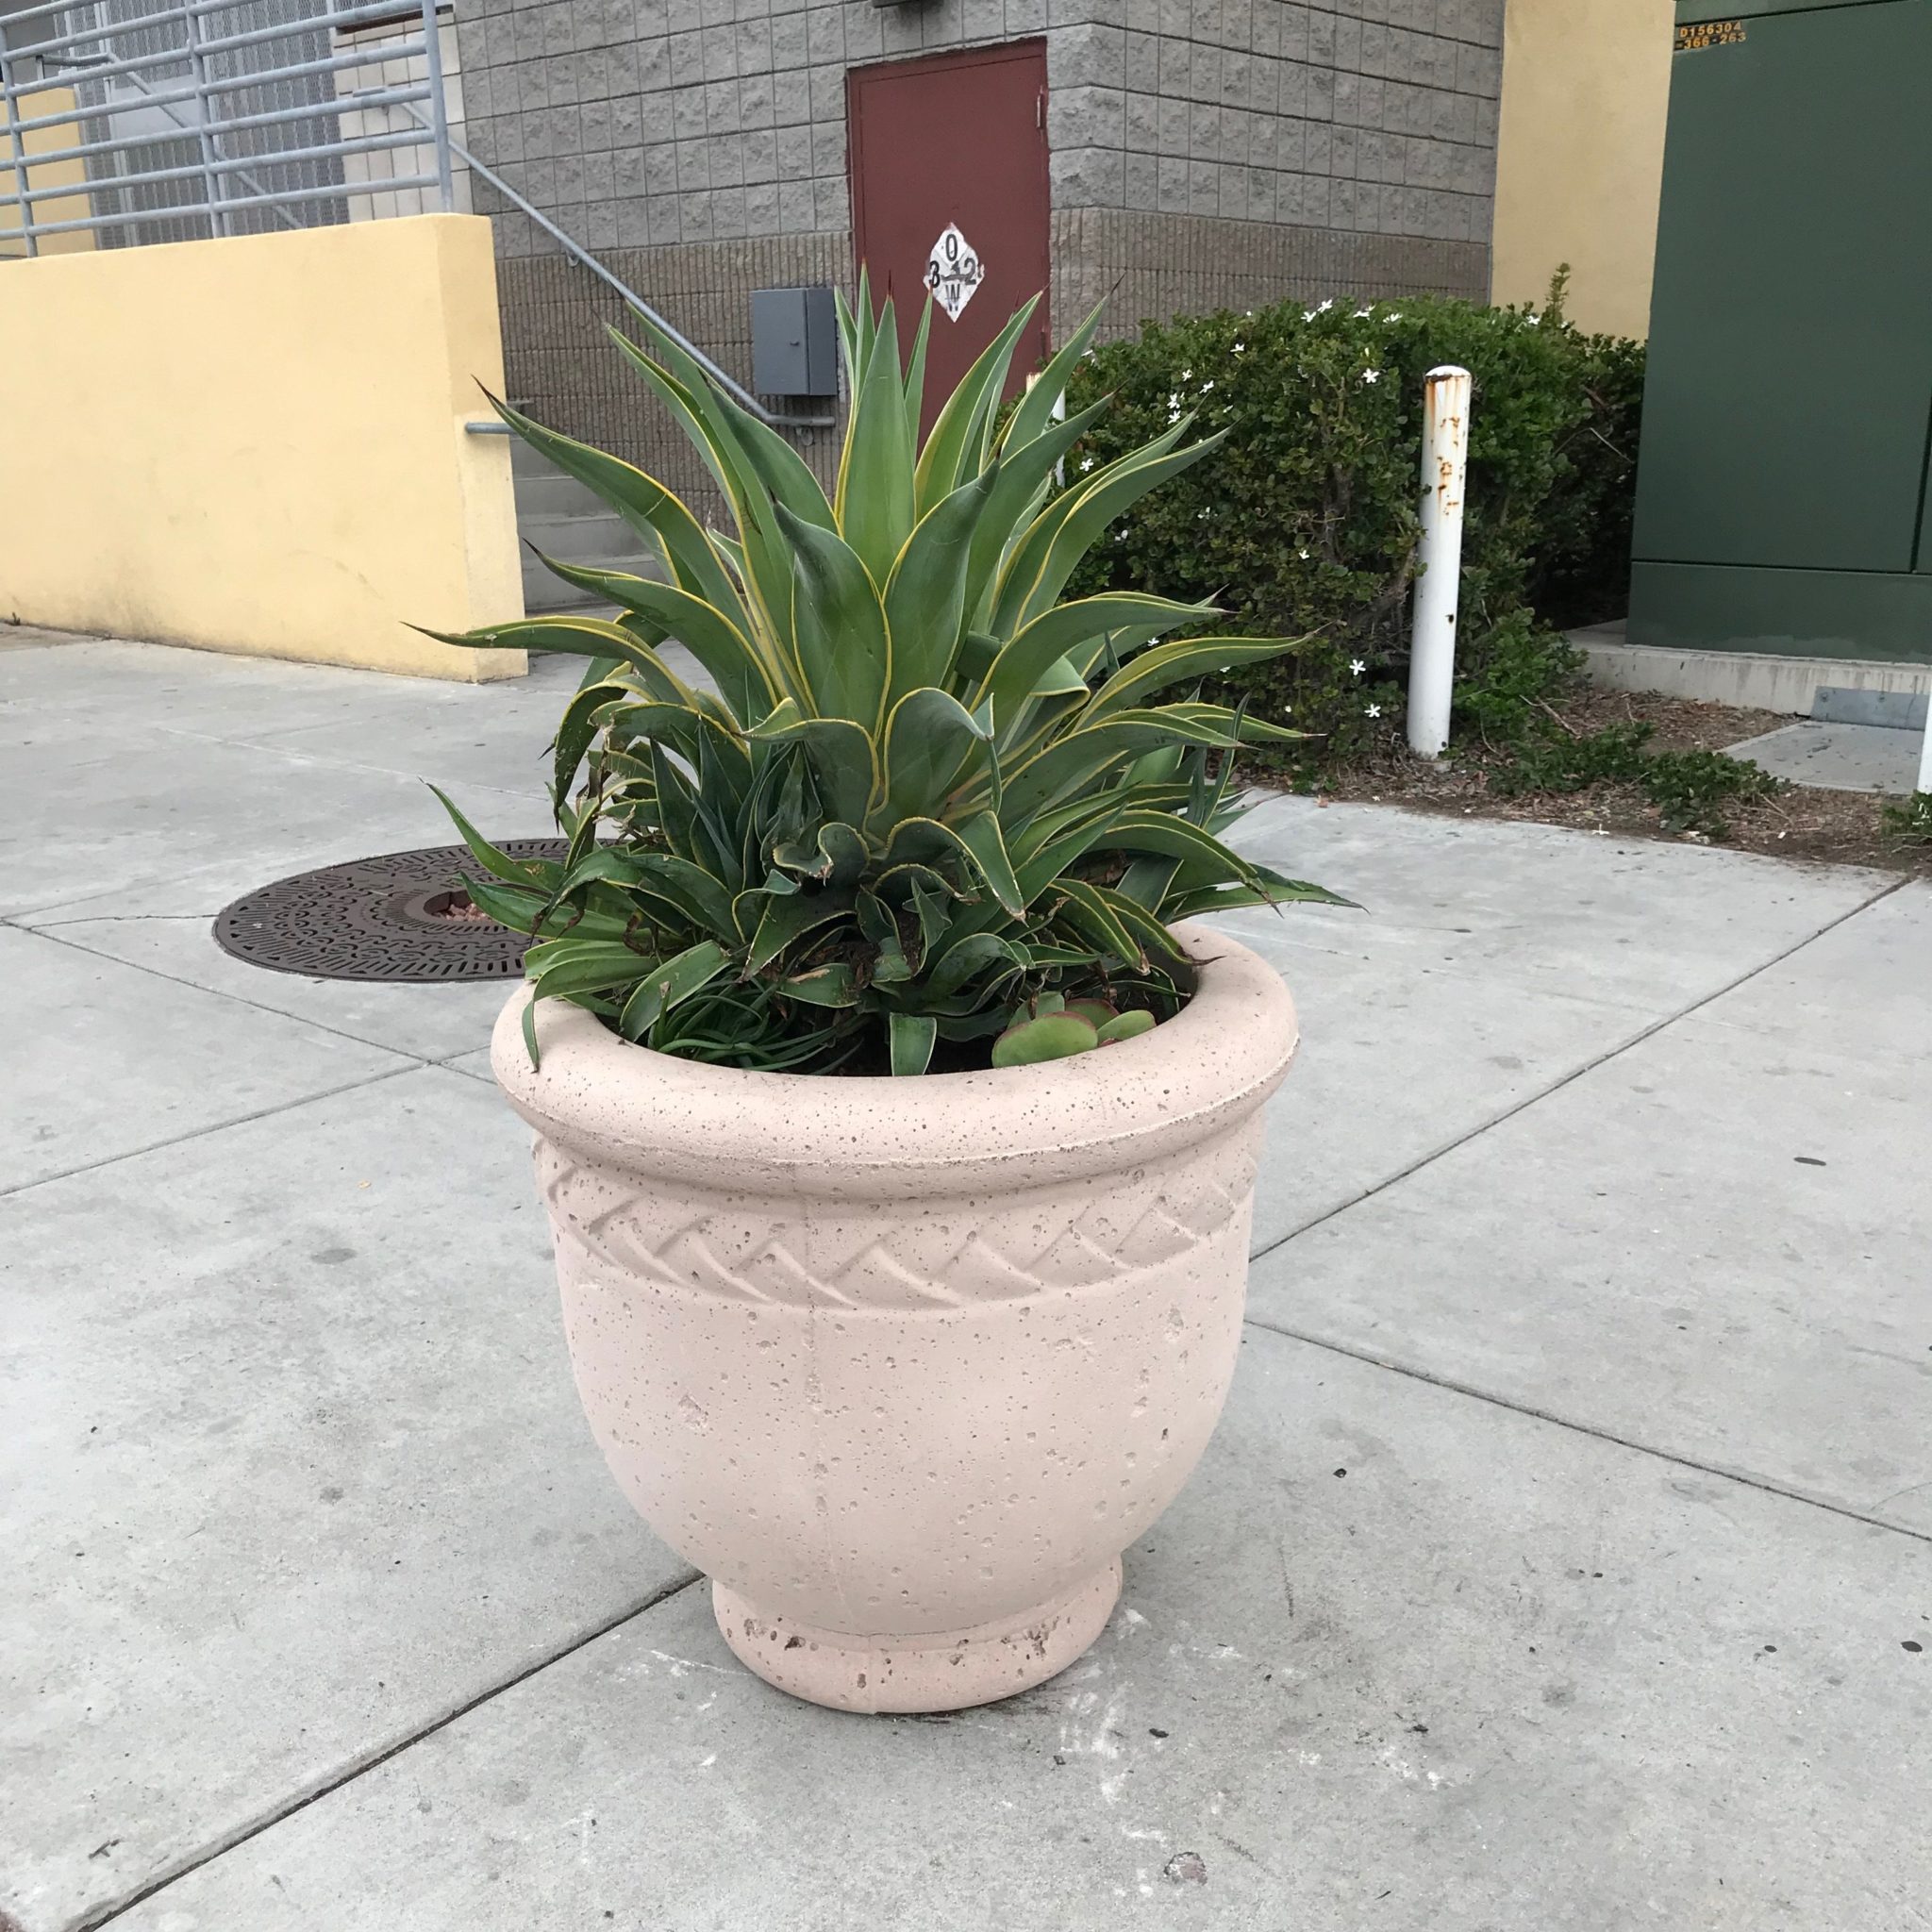 Sidewalk planter